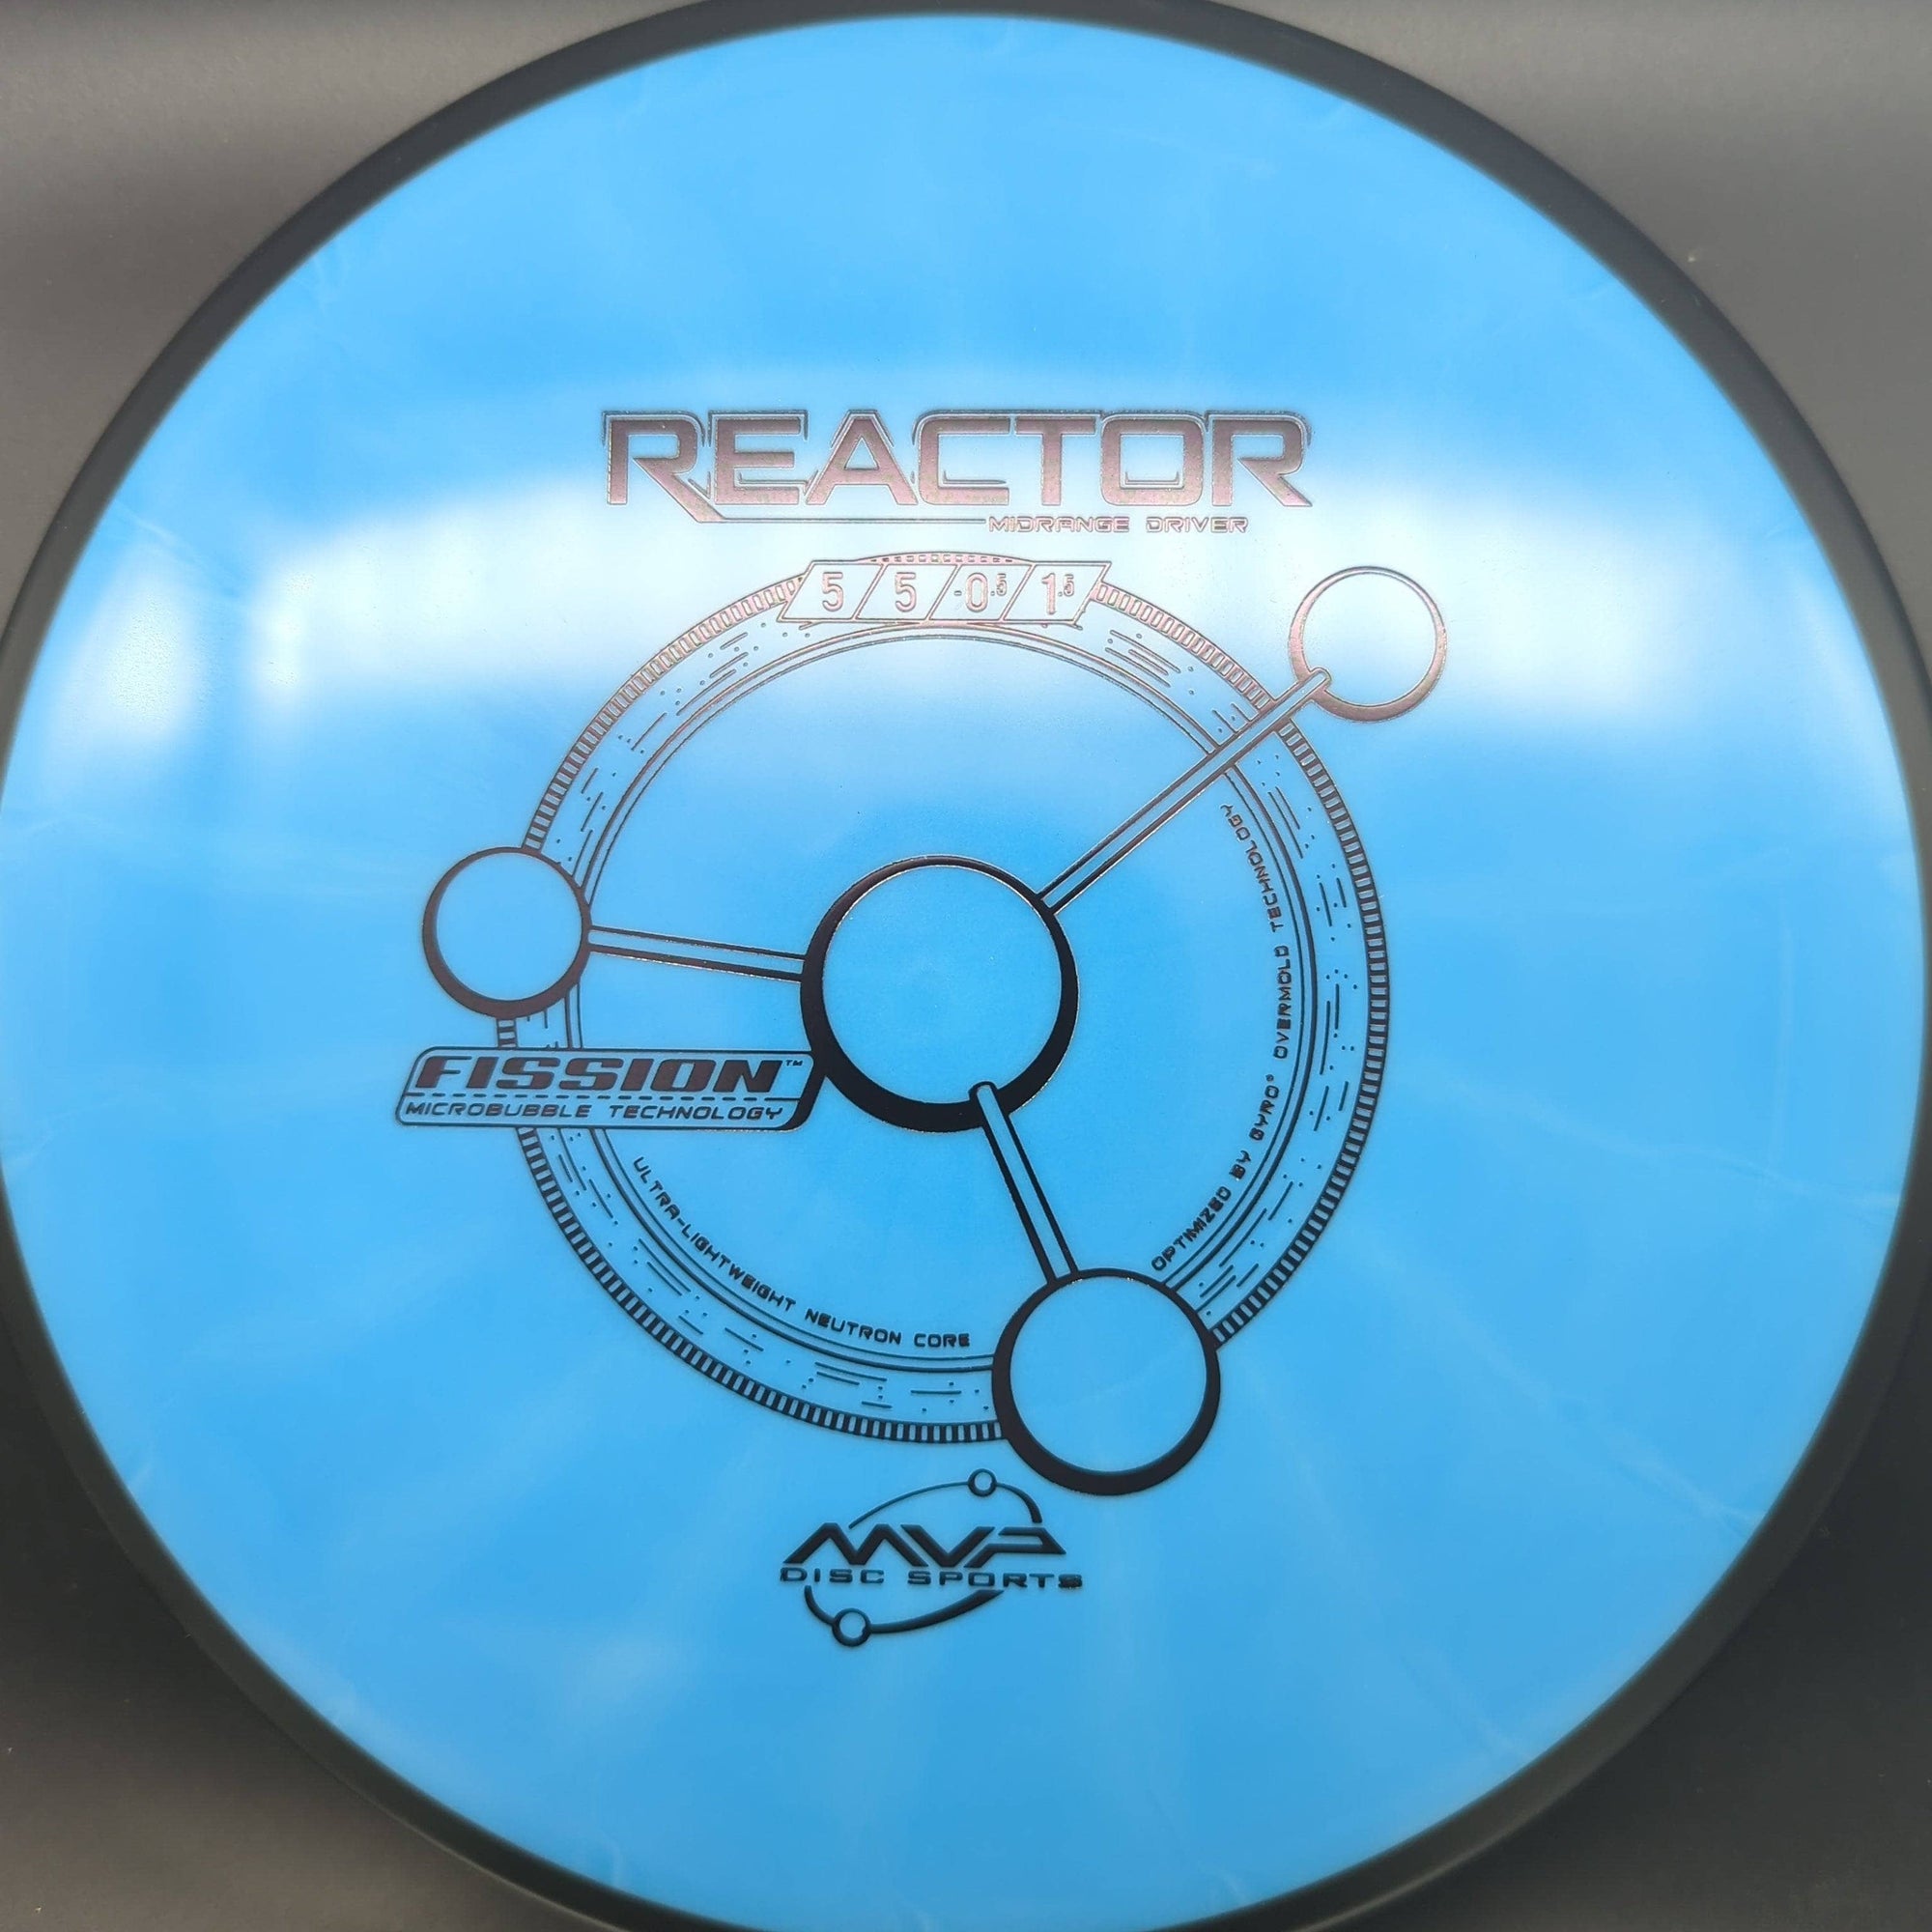 MVP Mid Range White 172g Reactor, Fission